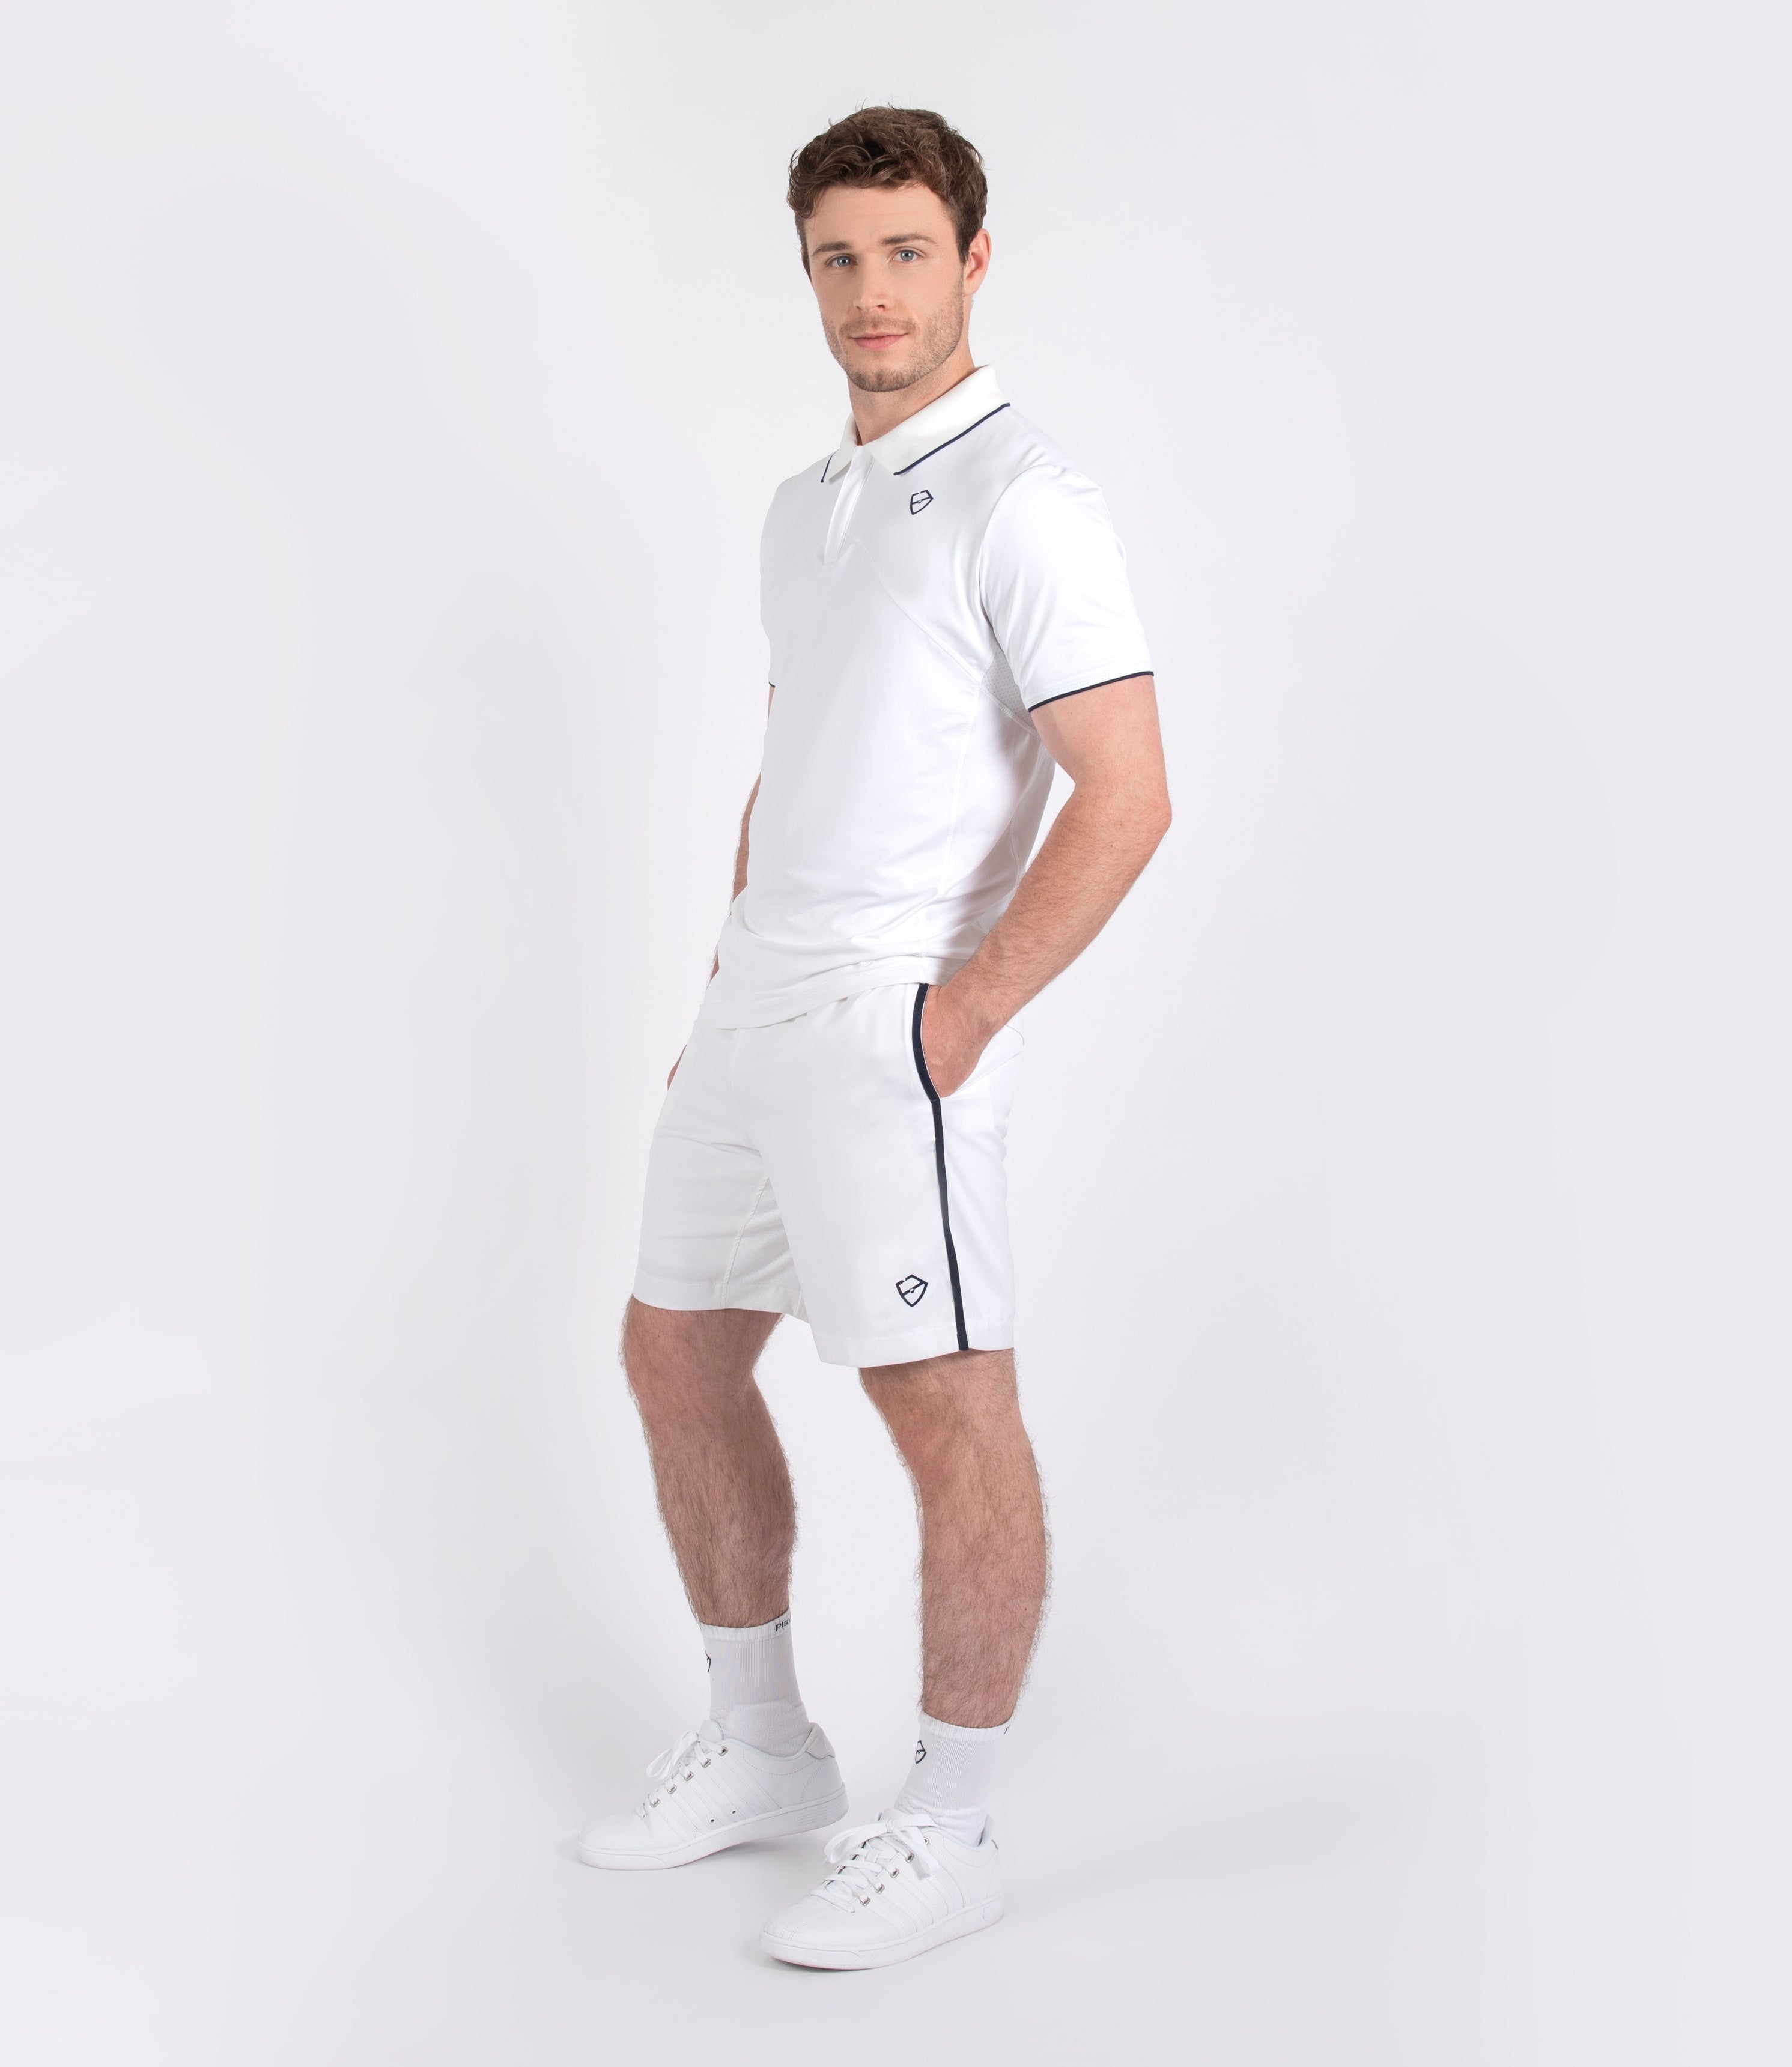 Mens Tenniswear-Short's-PlayBrave-George Short 8" - White/Navy-PlayBrave Sports